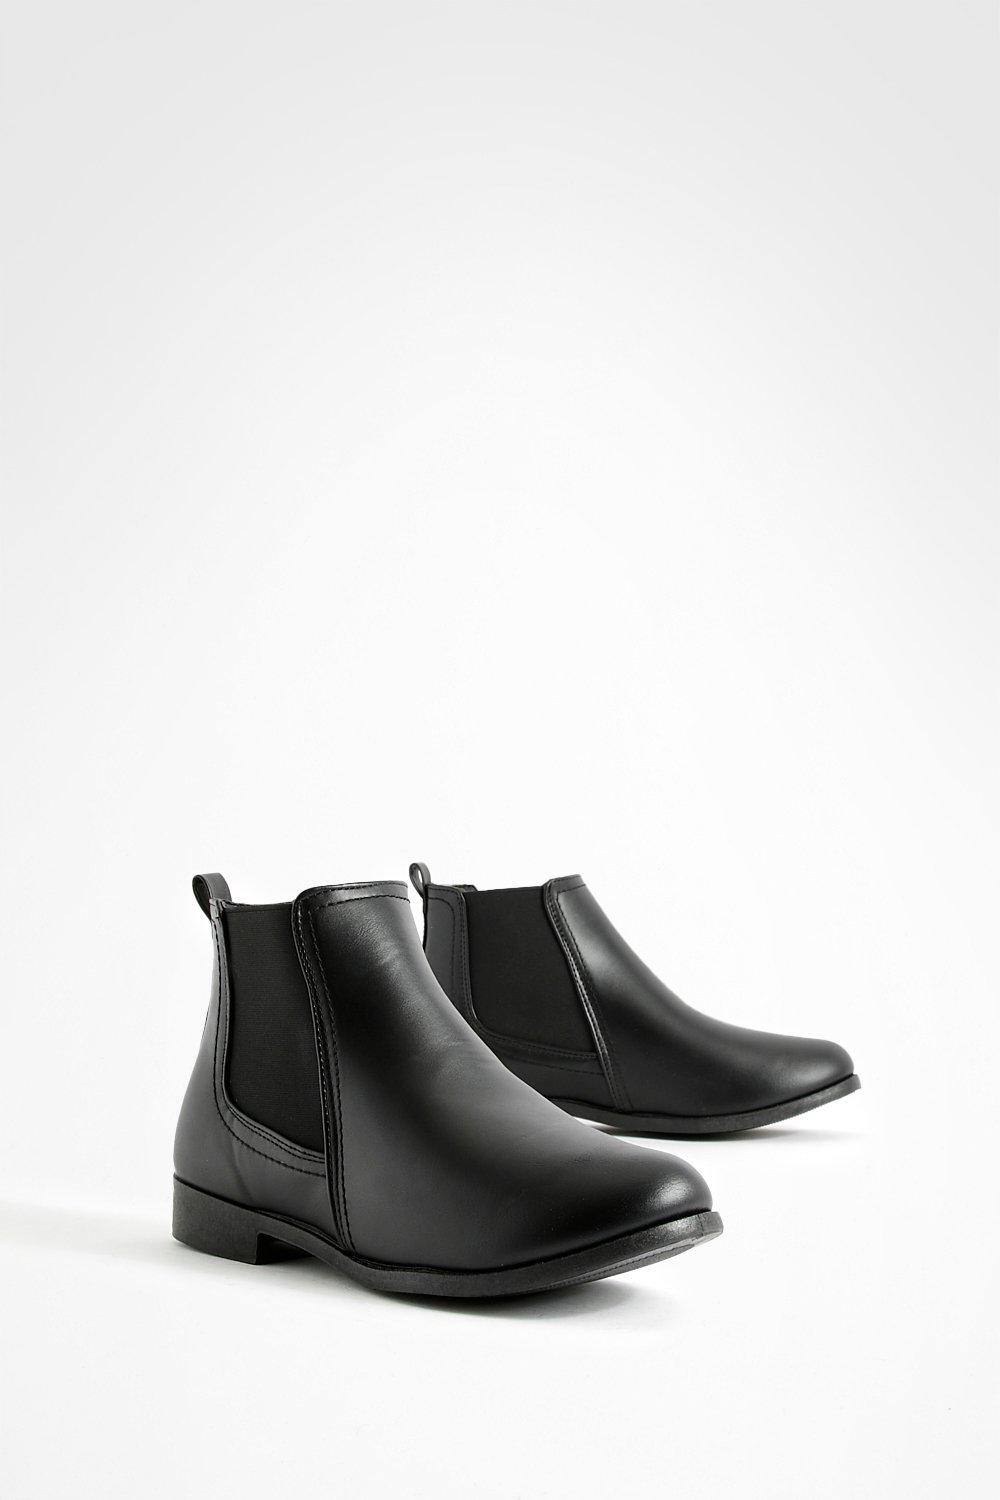 Womens Flat Chelsea Boots - Black - 3, Black